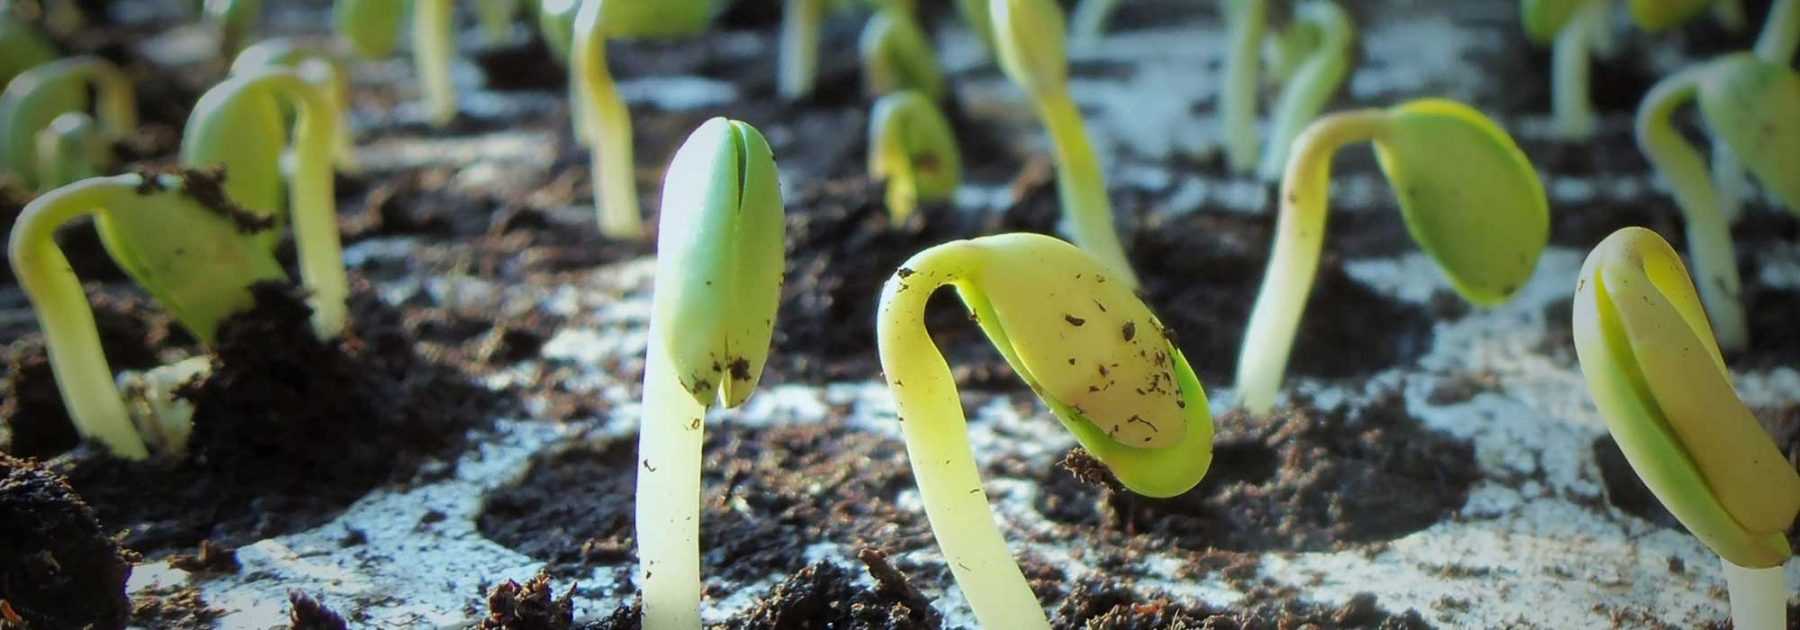 Les étapes de la germination – Les Petits Sorciers